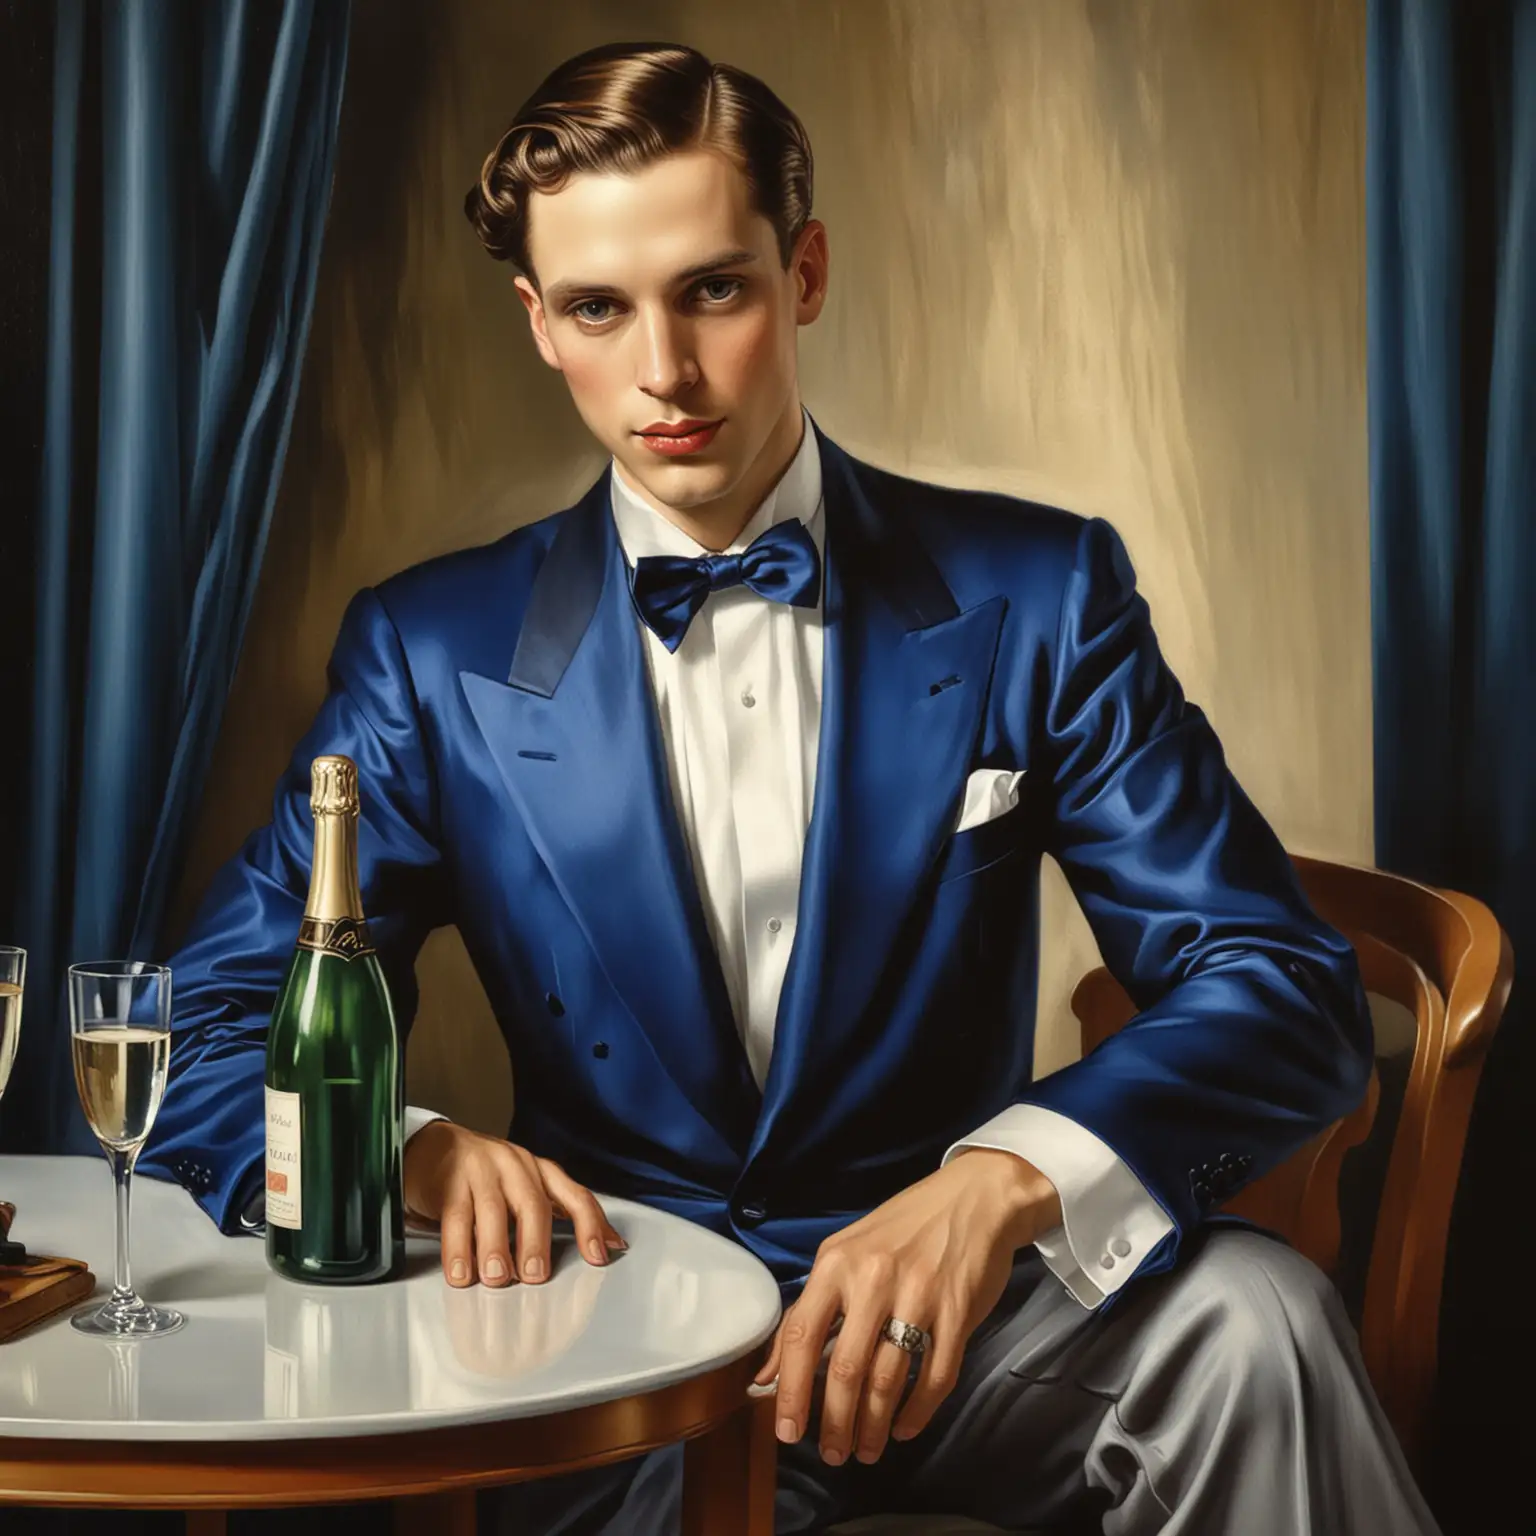 tamara de lempicka male art deco sitting at small table with champagne bottle cobalt blue tuxedo
